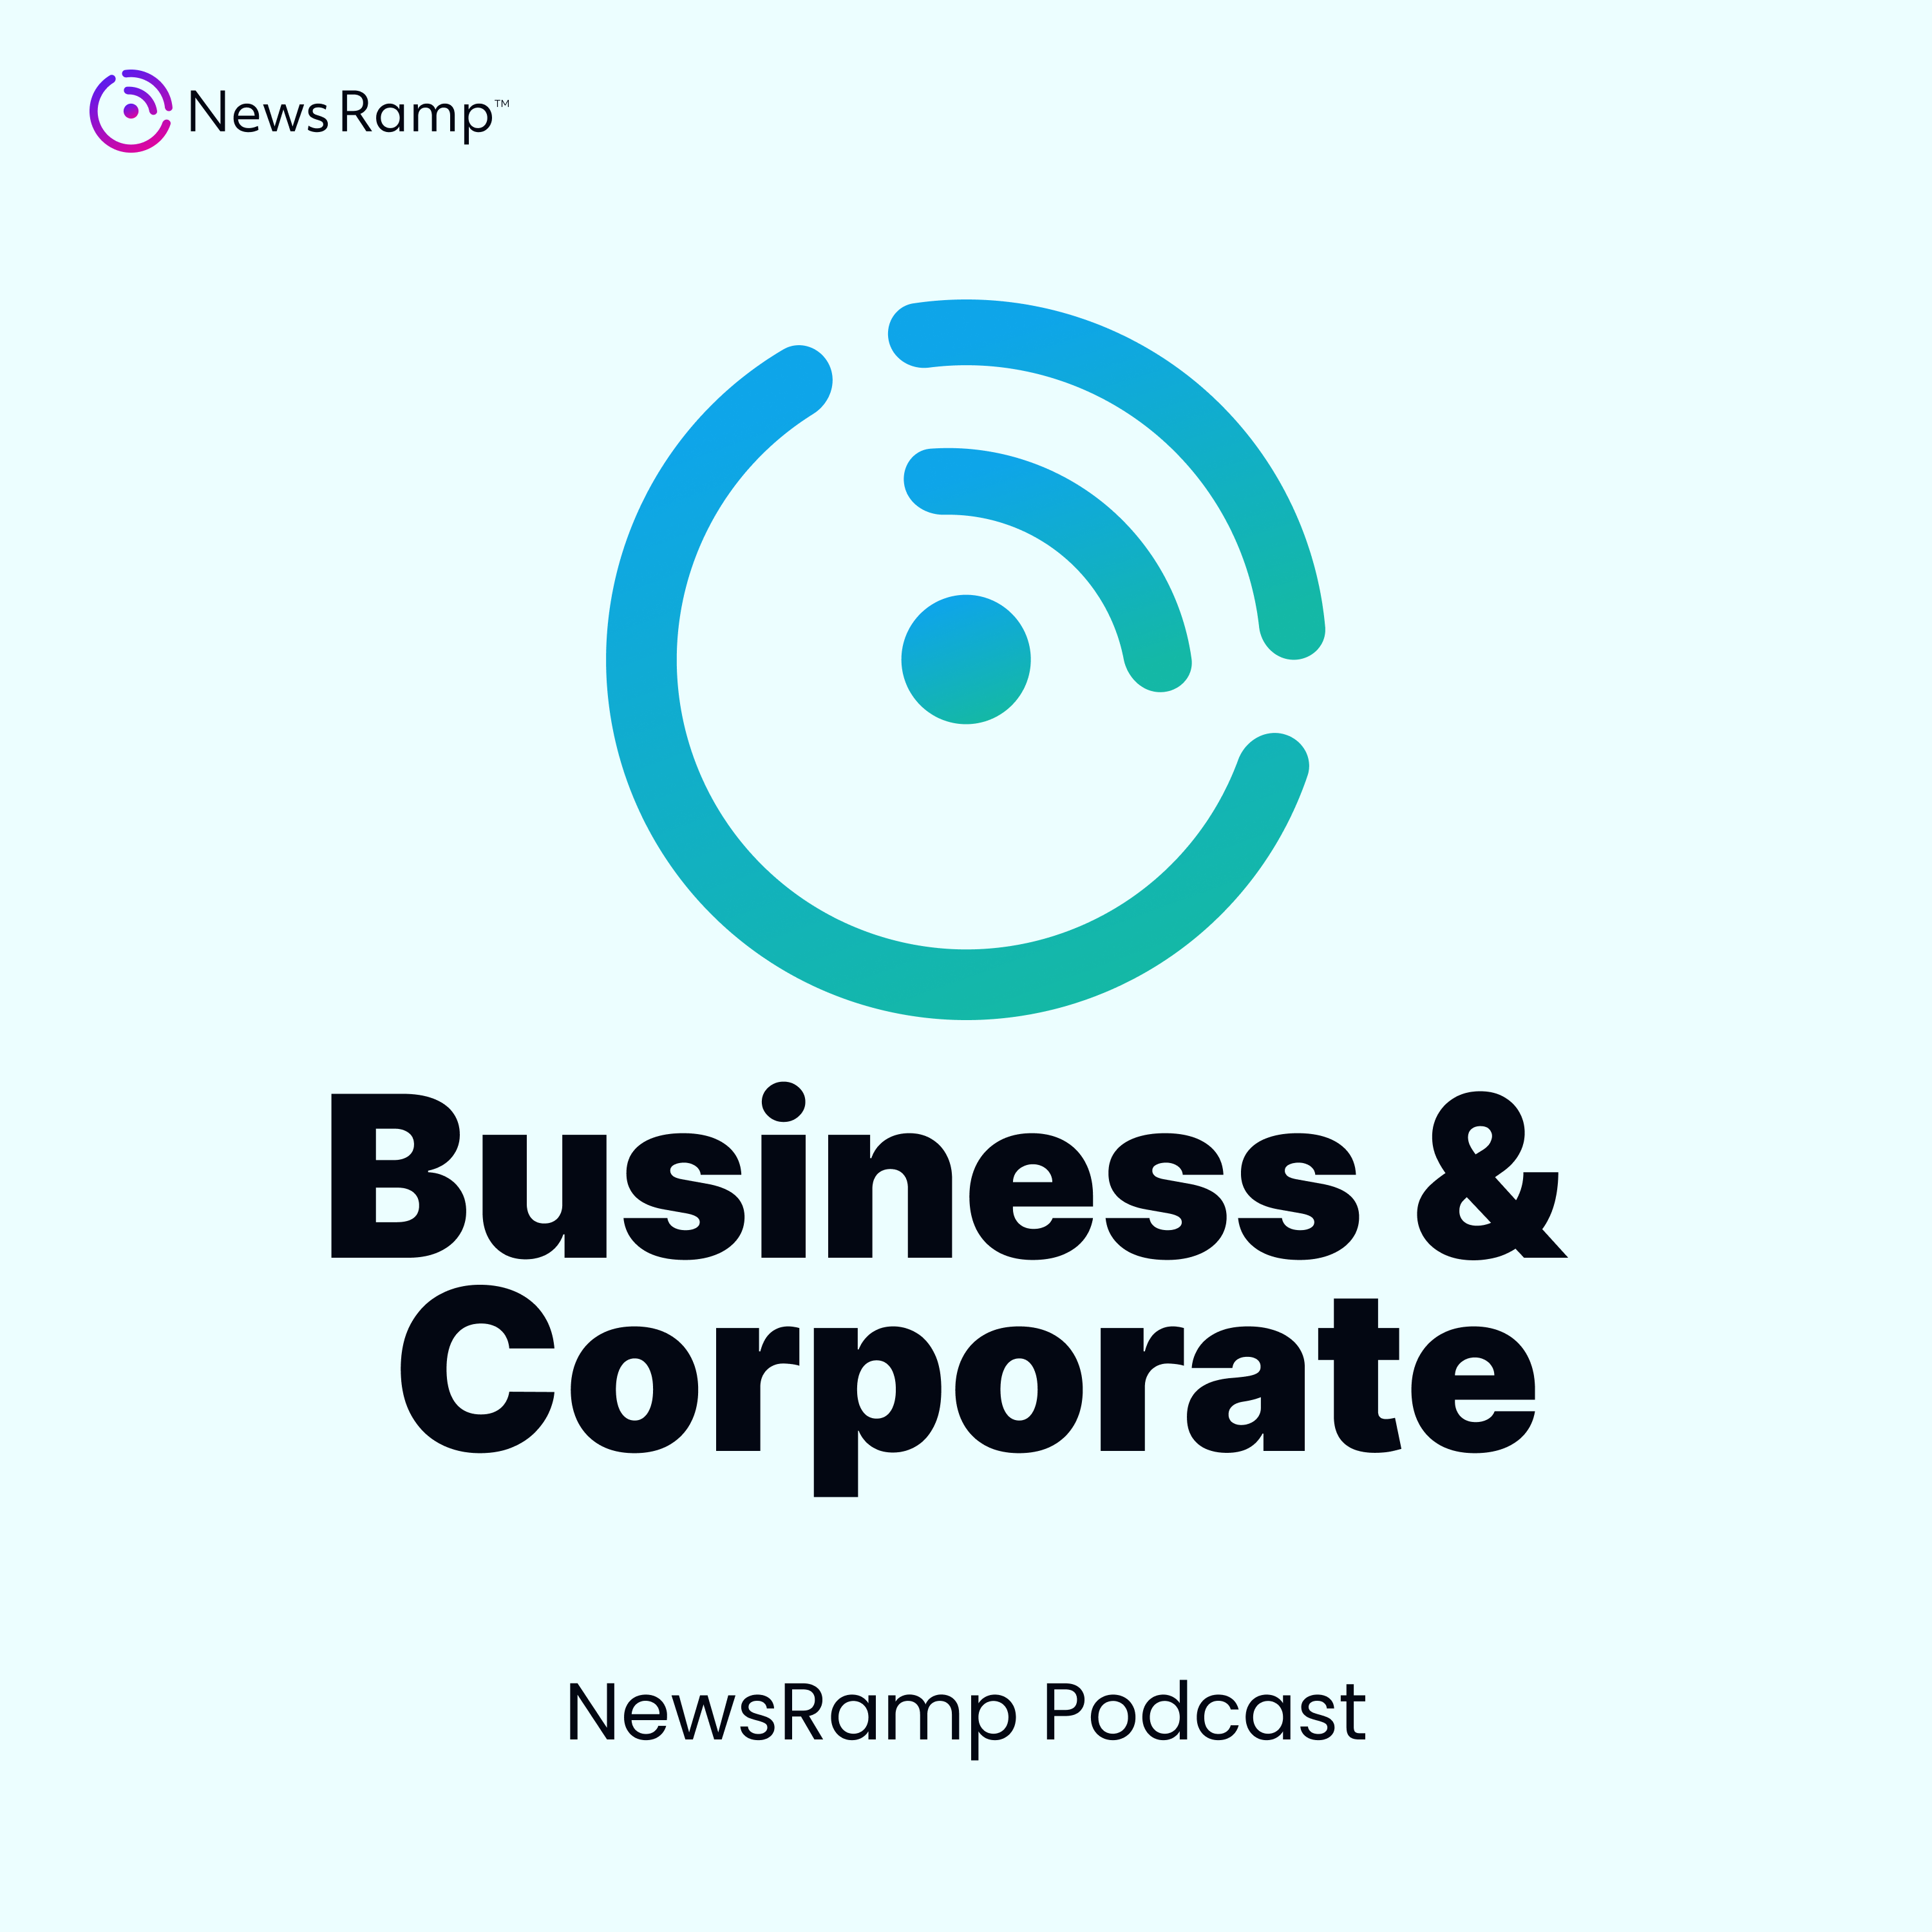 NewsRamp Business & Corporate Podcast